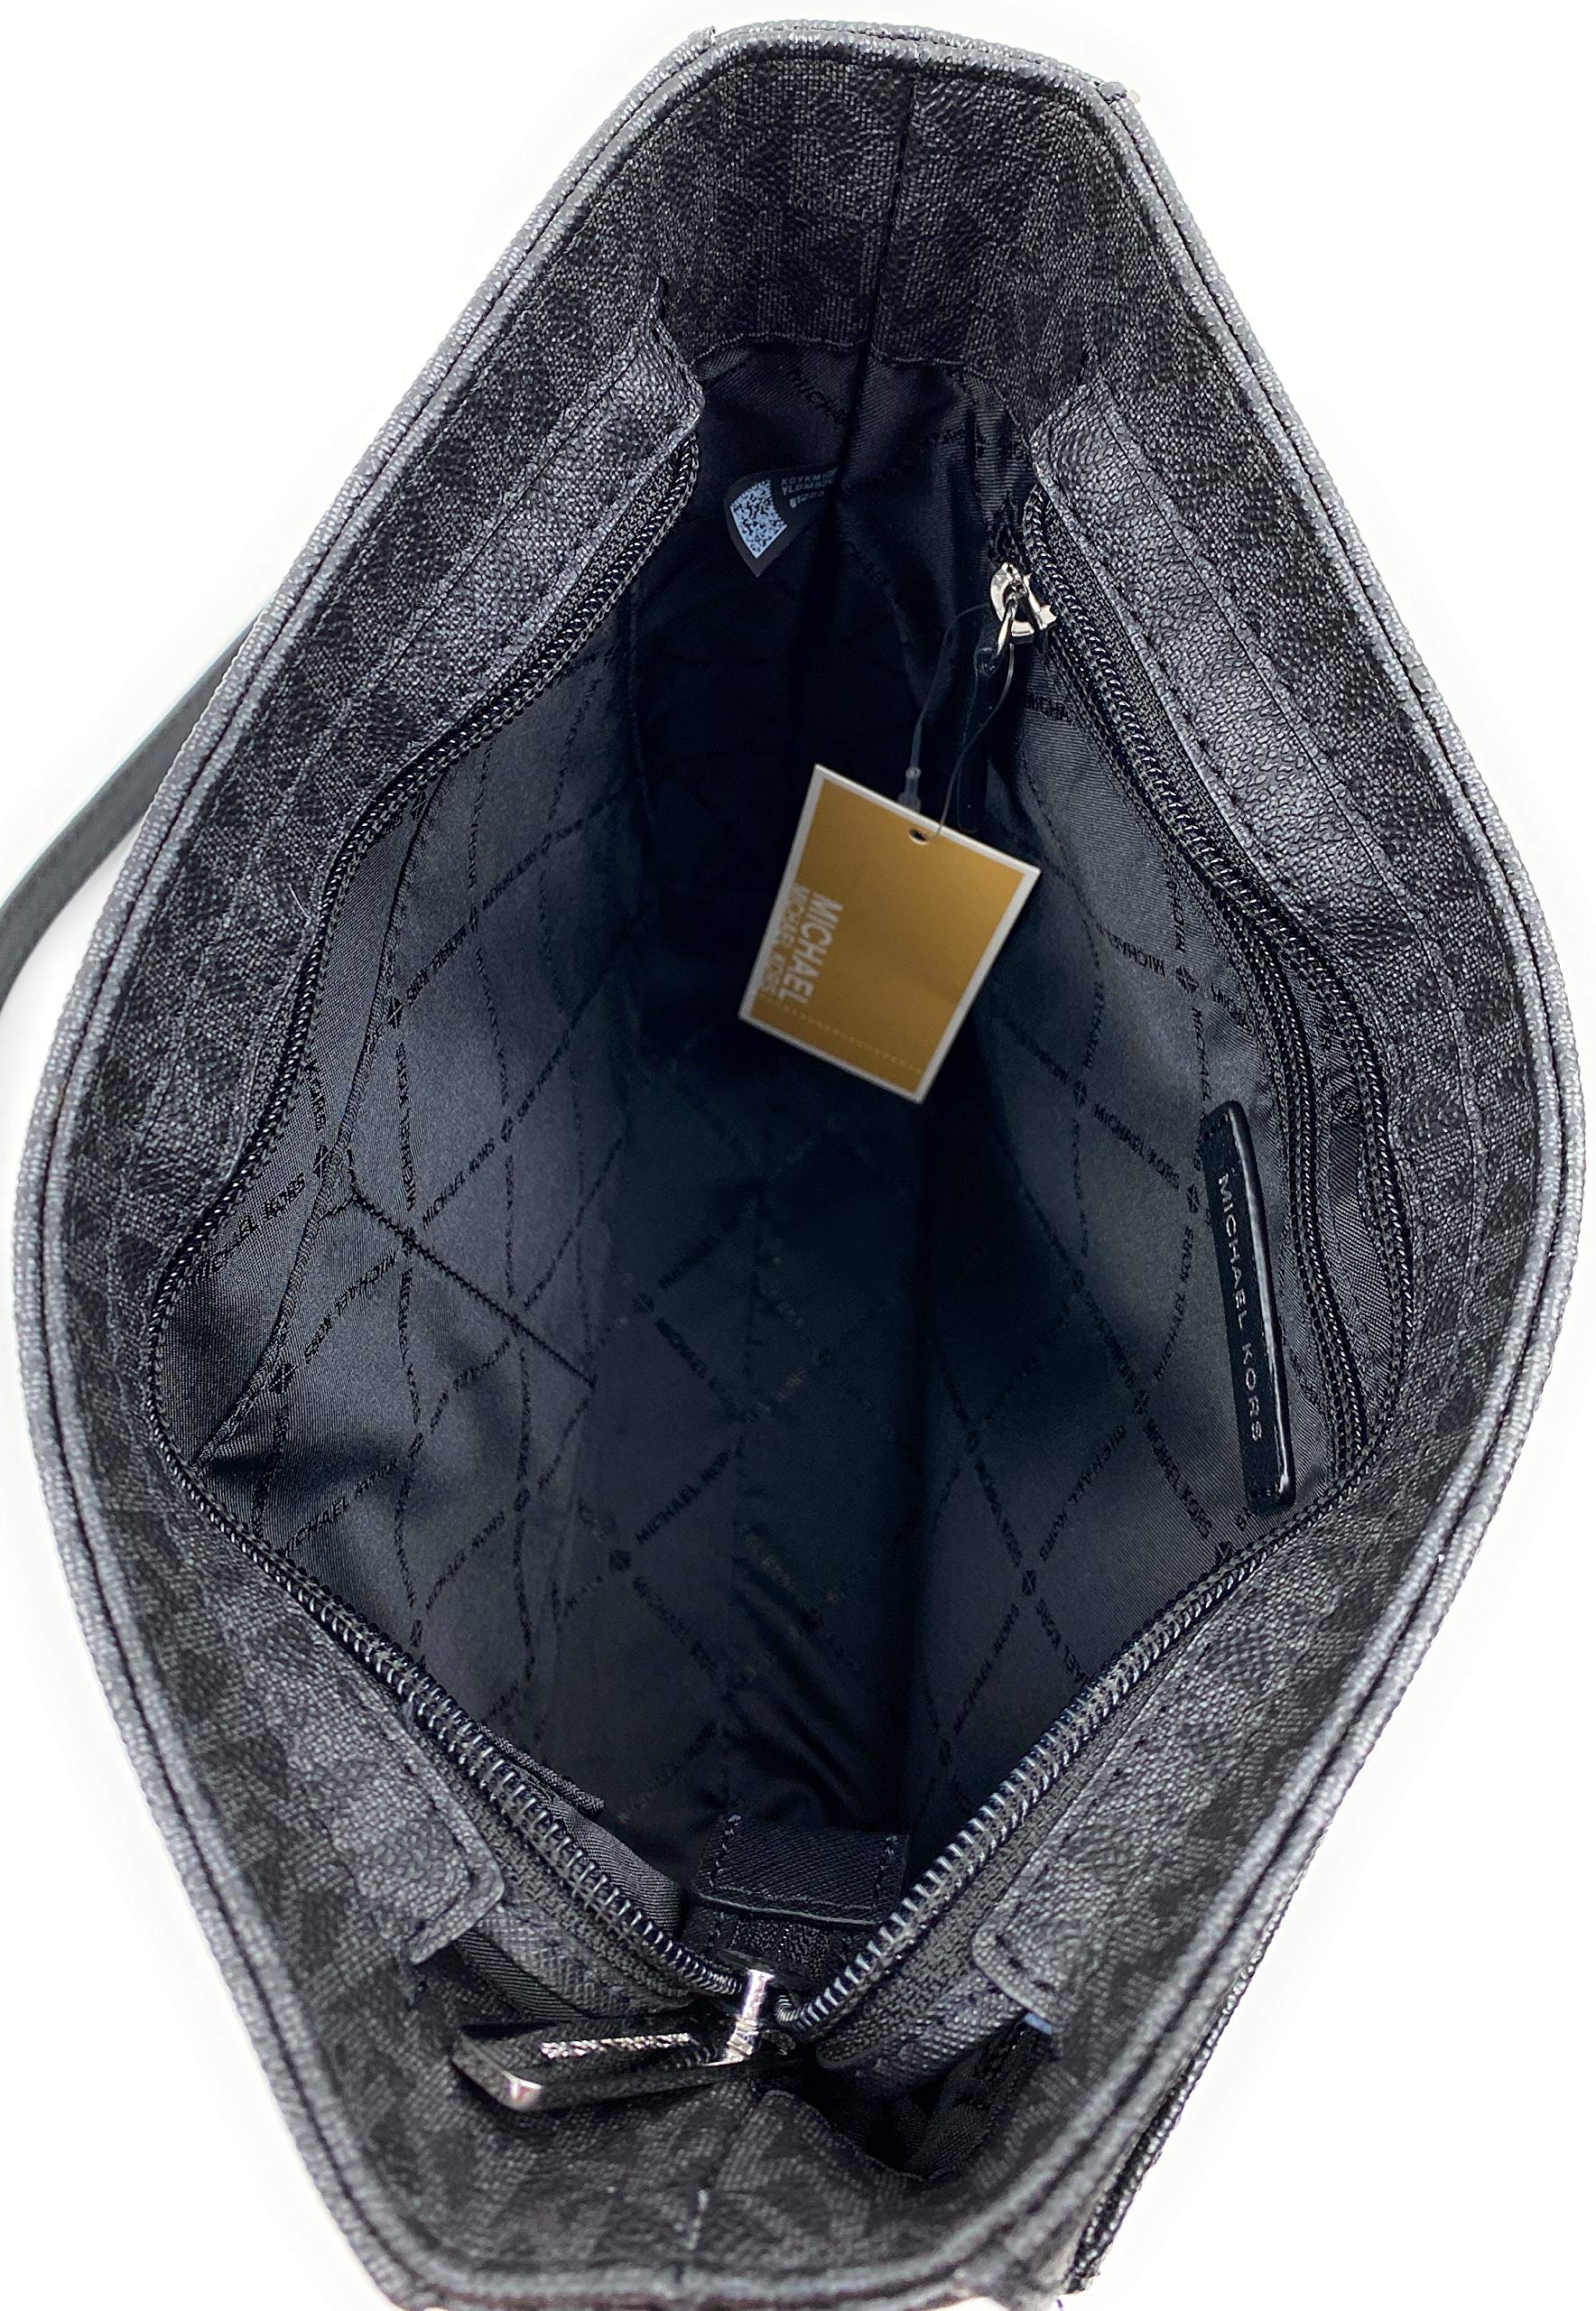 Michael Kors Jet Set Travel Large Messenger Crossbody bundle with Trifold  Wallet Purse Hook (Signature MK Black Gold/Black)